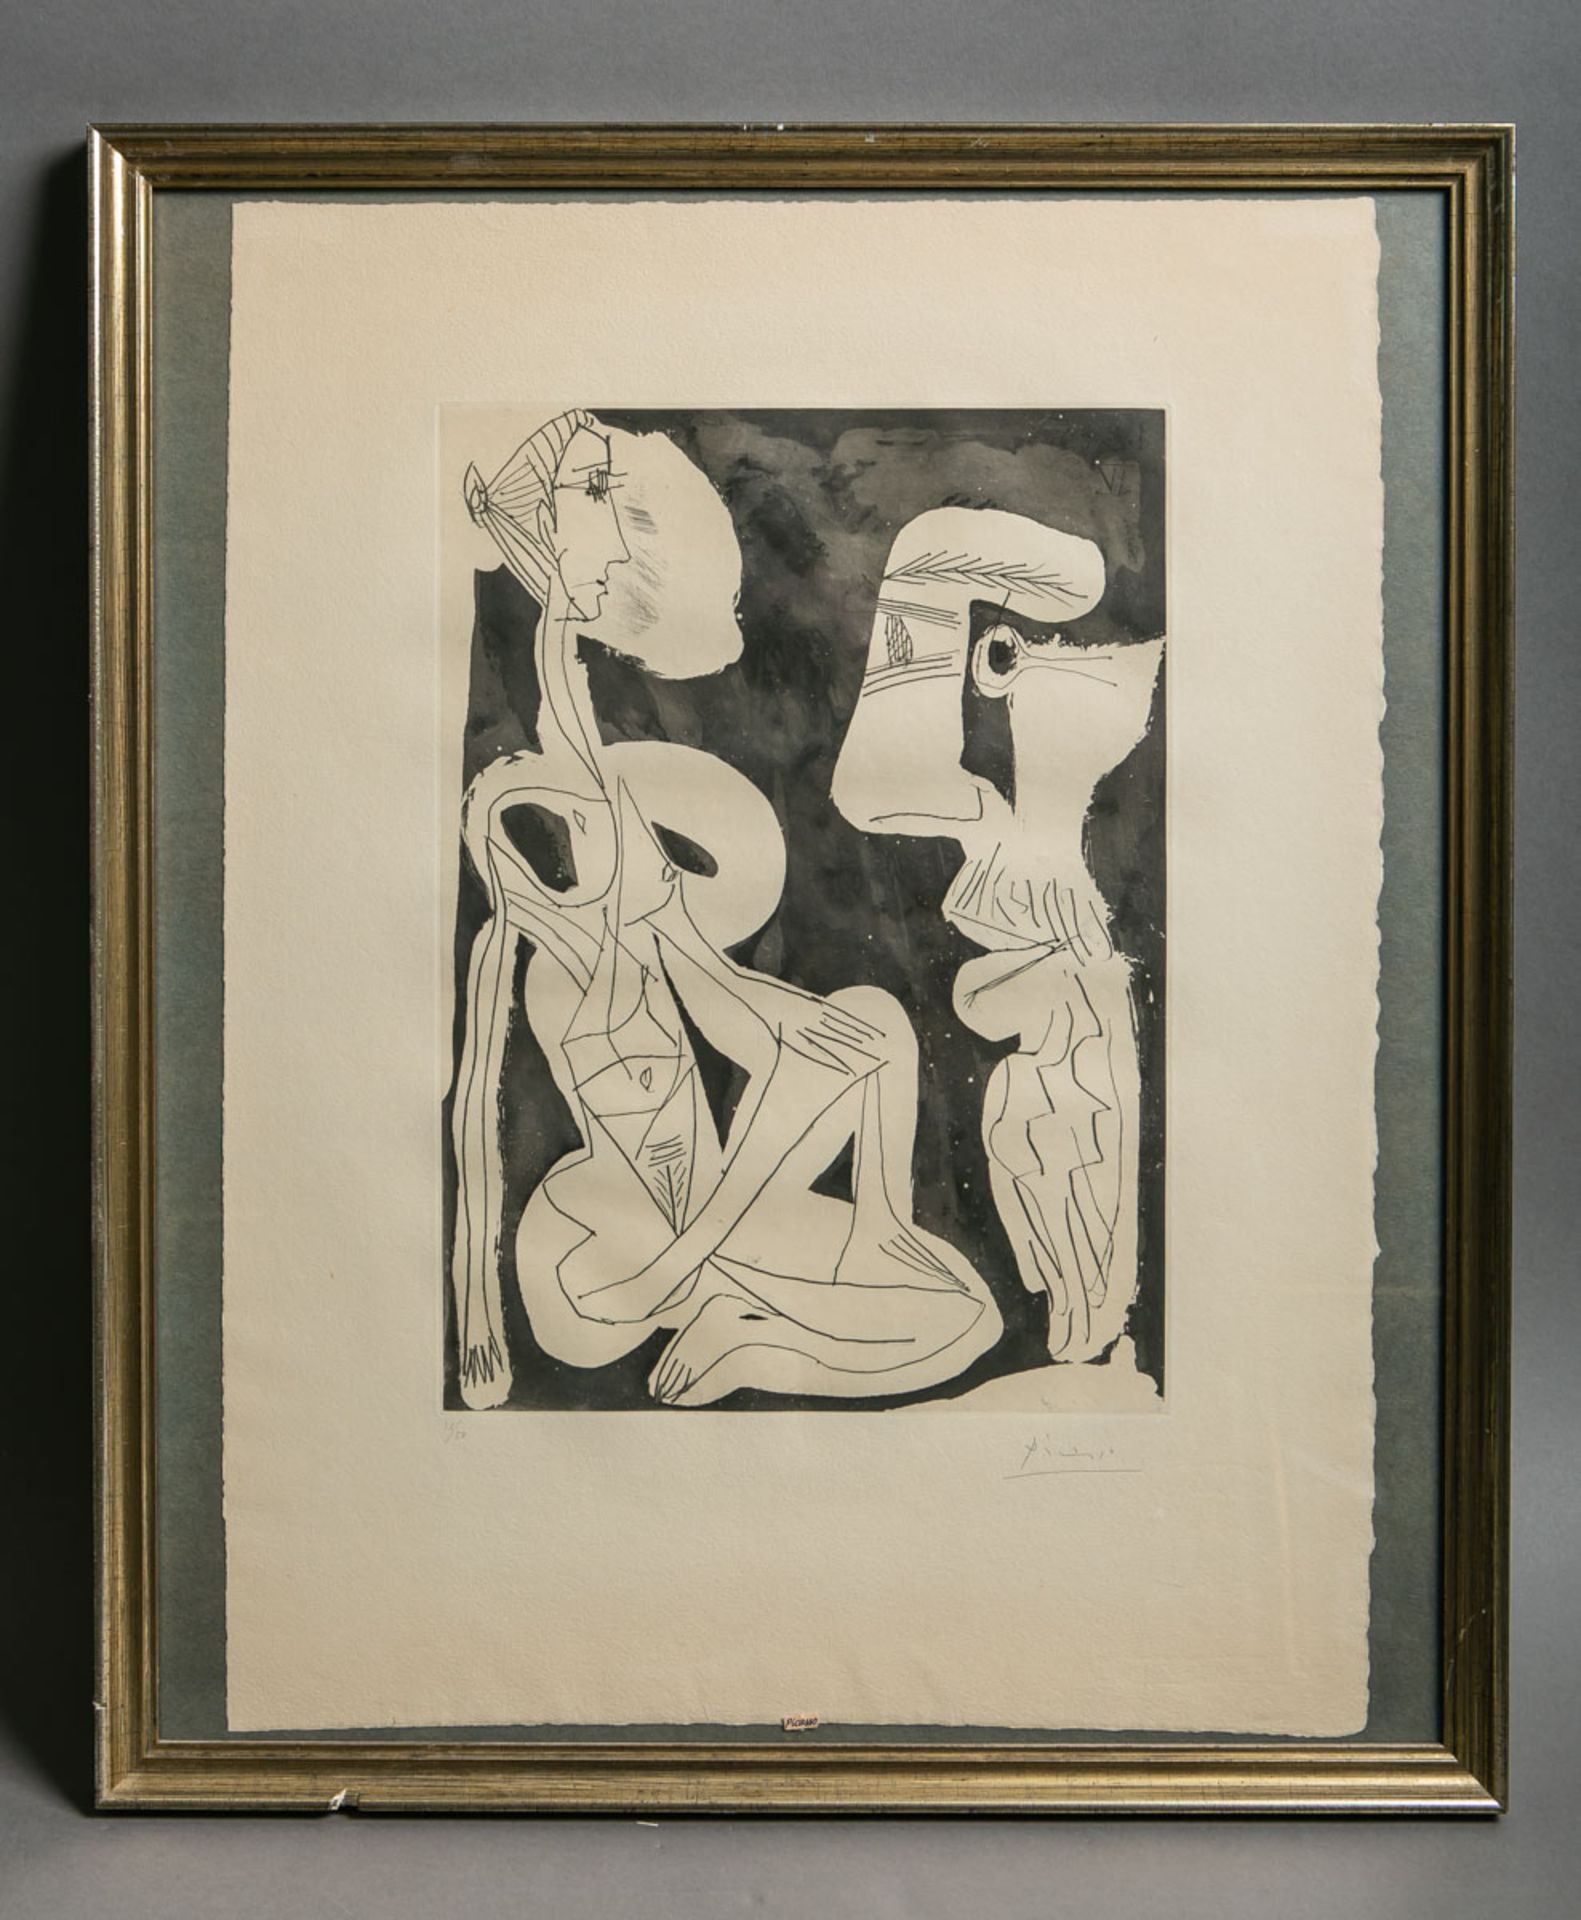 Picasso, Pablo (1881 - 1973), "Le Modele" (1965)